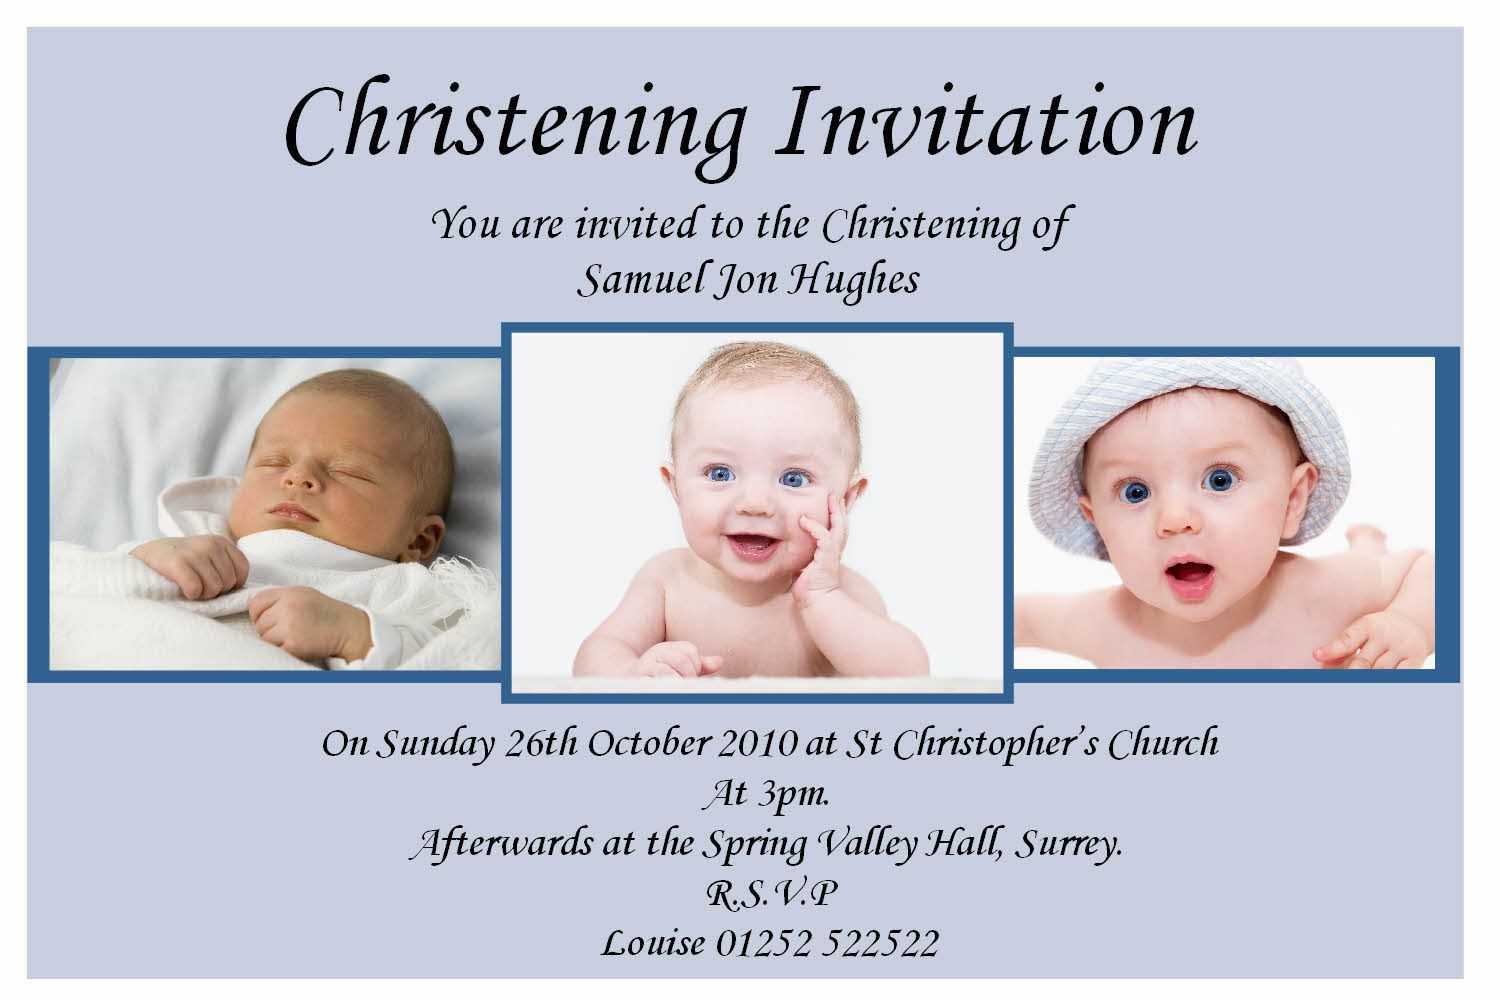 Christening Invitation Cards : Christening Invitation Cards With Regard To Free Christening Invitation Cards Templates